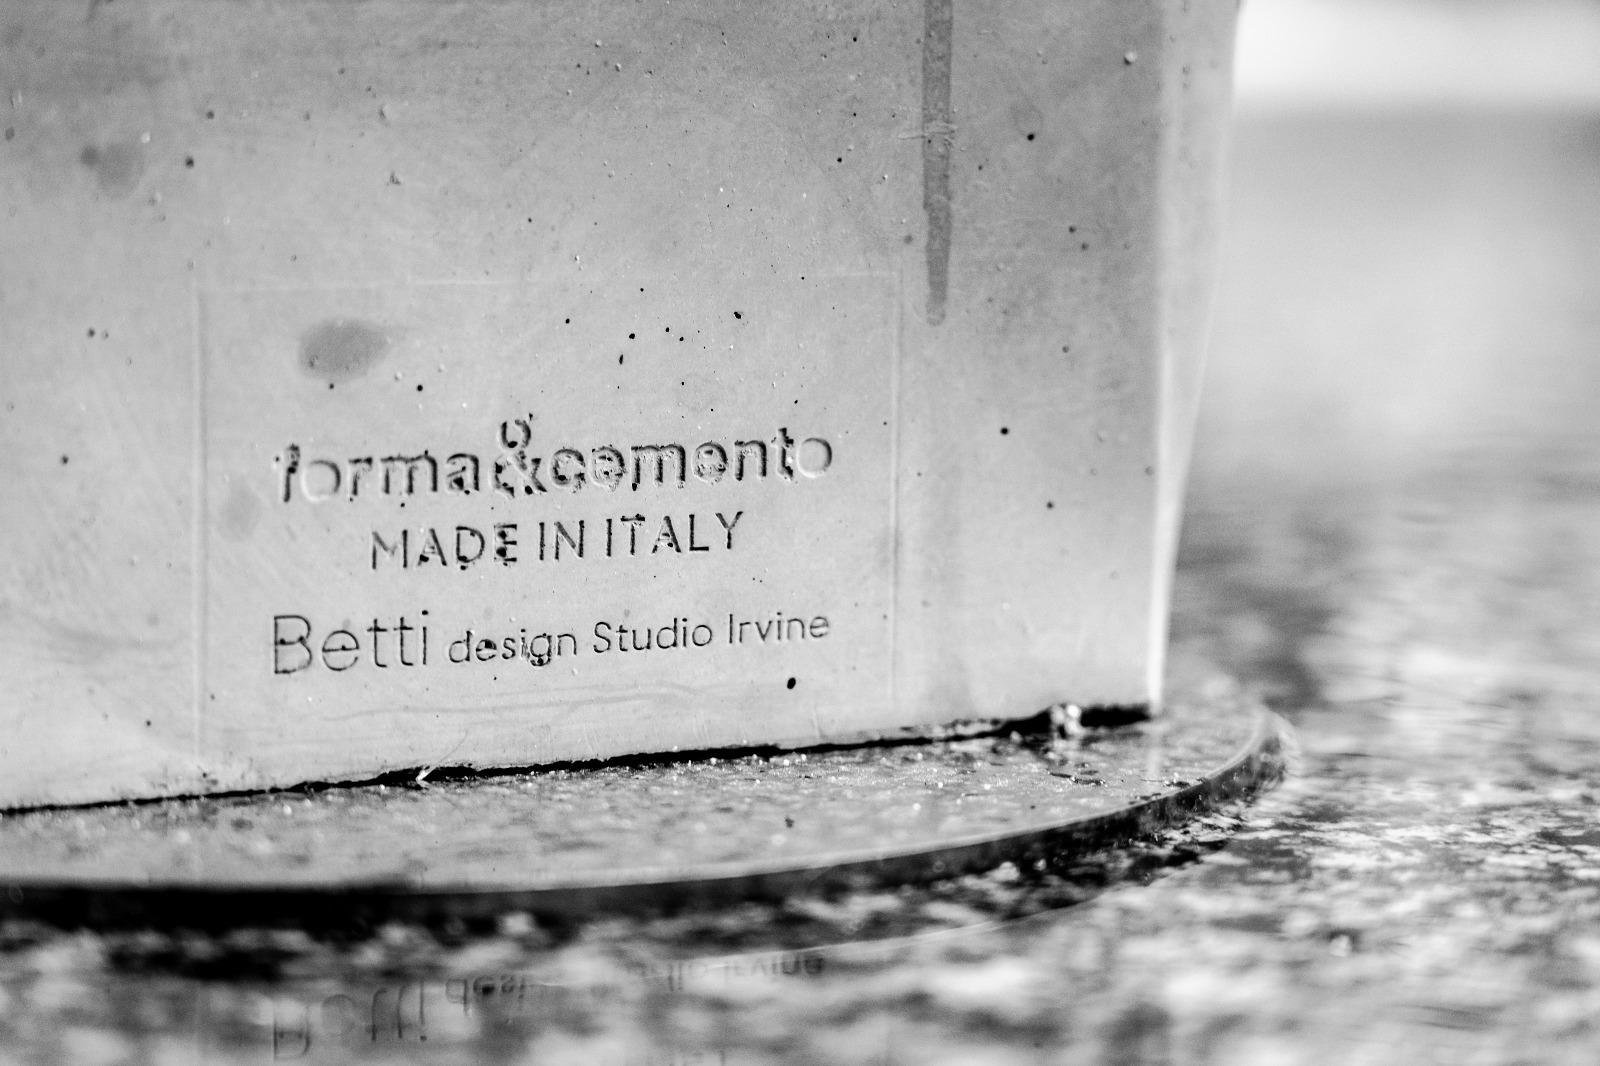 Machine-Made 21st Century Studio Irvine Betti Concrete Stool in Brick Red Cement Handmade For Sale